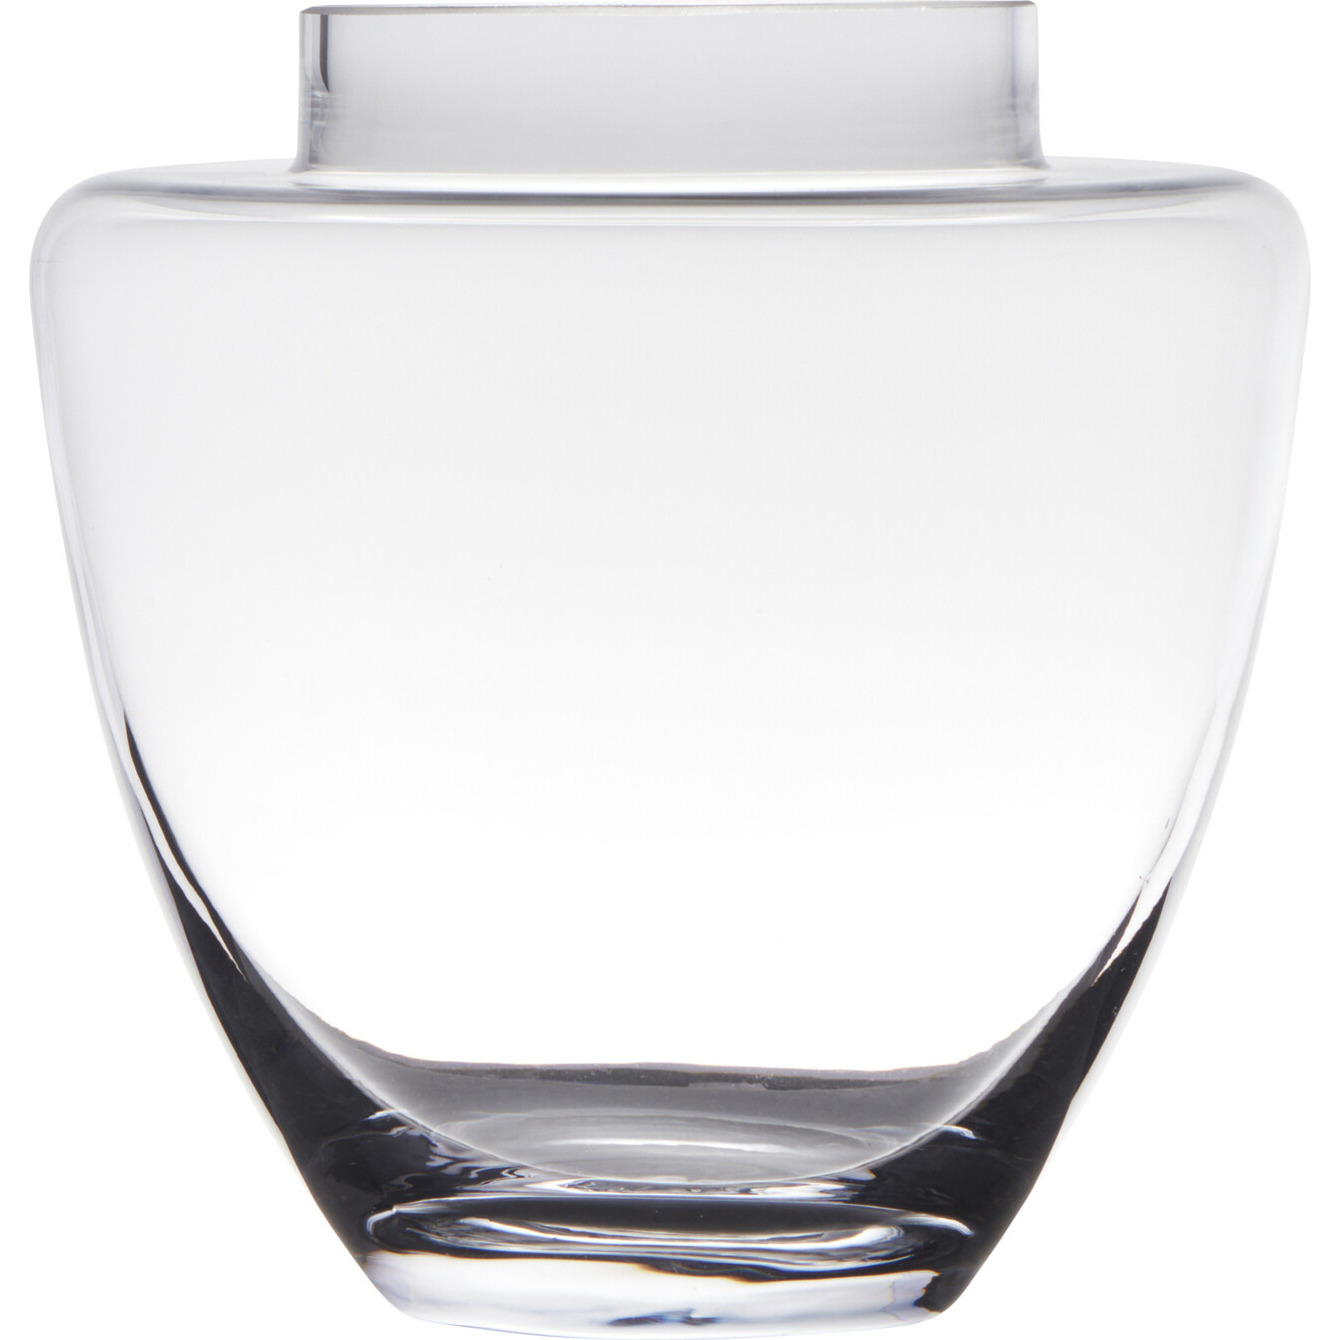 Merkloos Transparante luxe vaas/vazen van glas 19 x 19 cm -